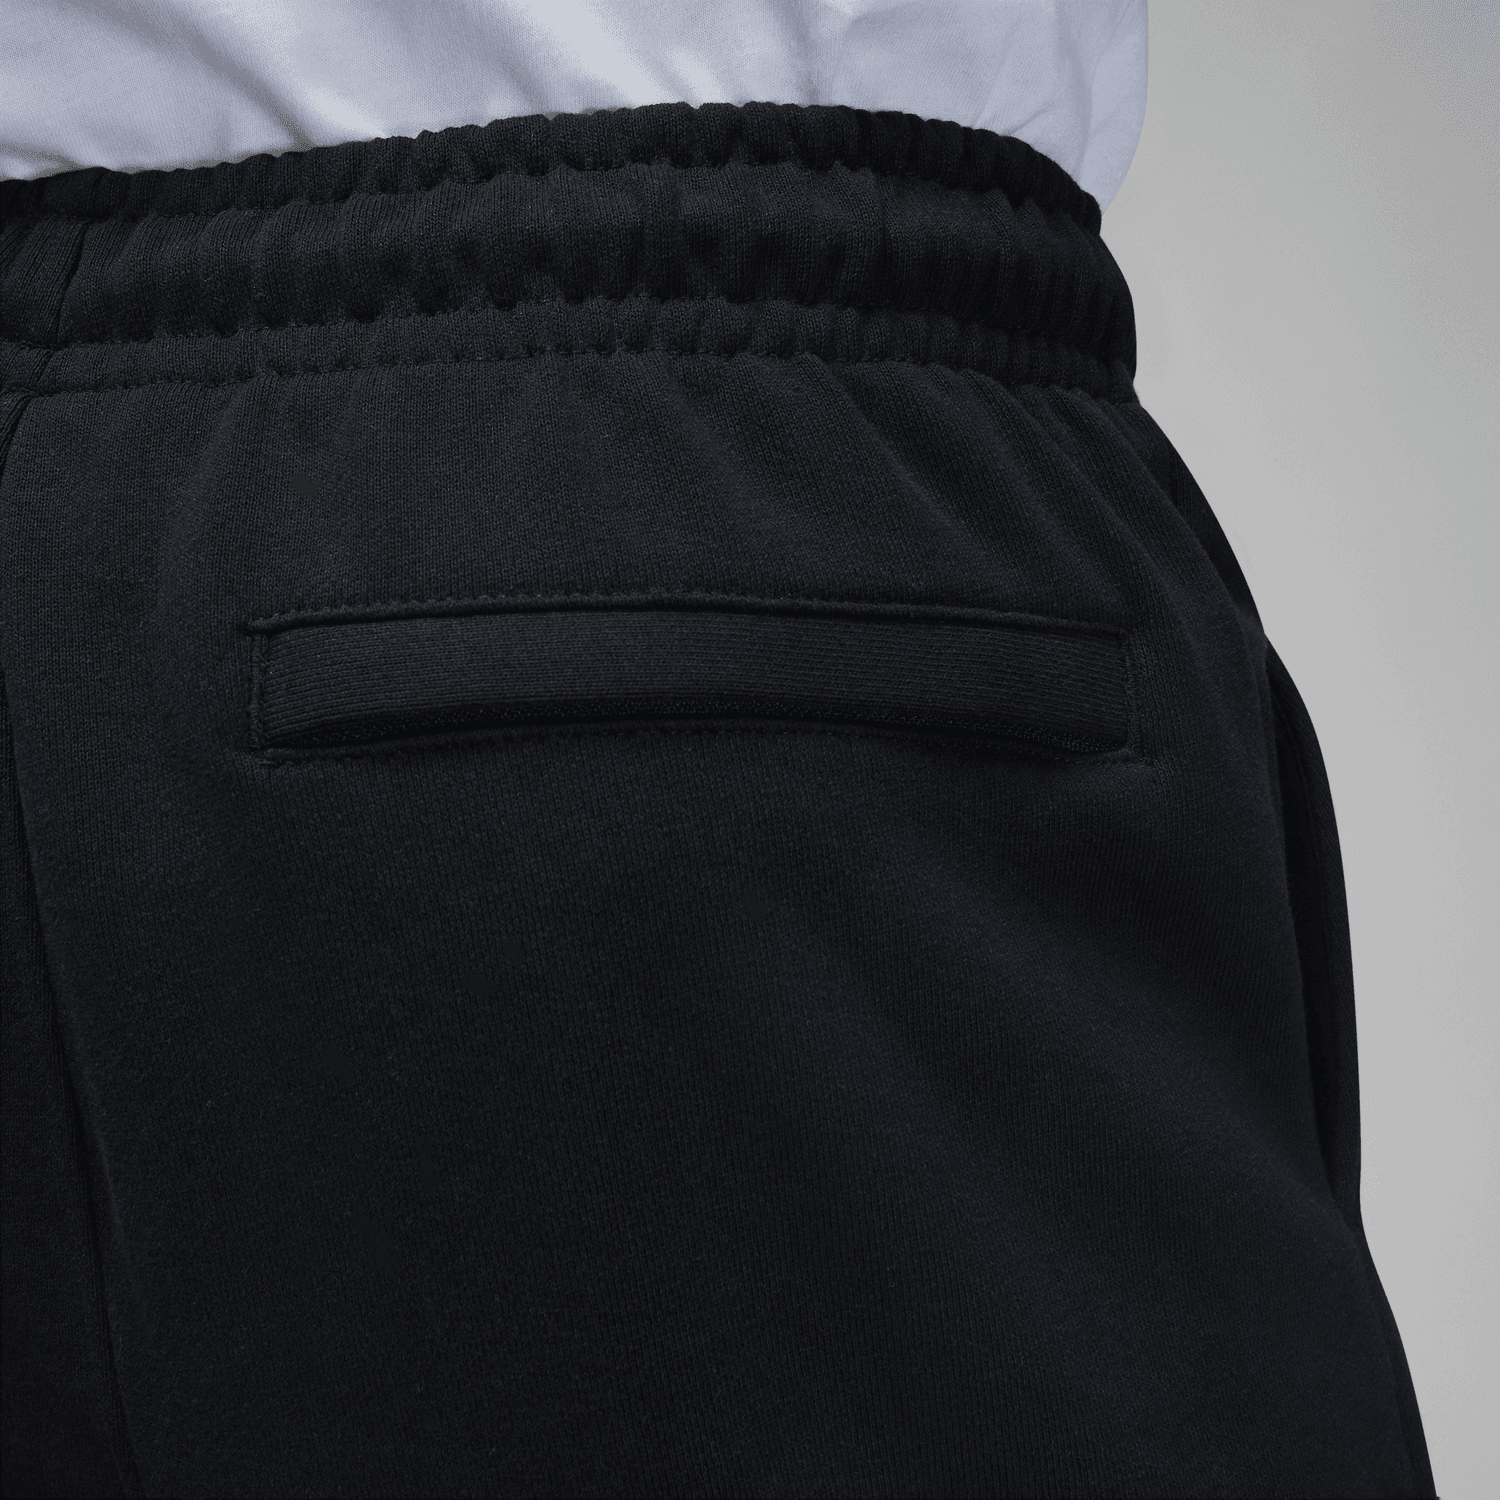 Jordan Essentials Fleece Pants Black - black/white